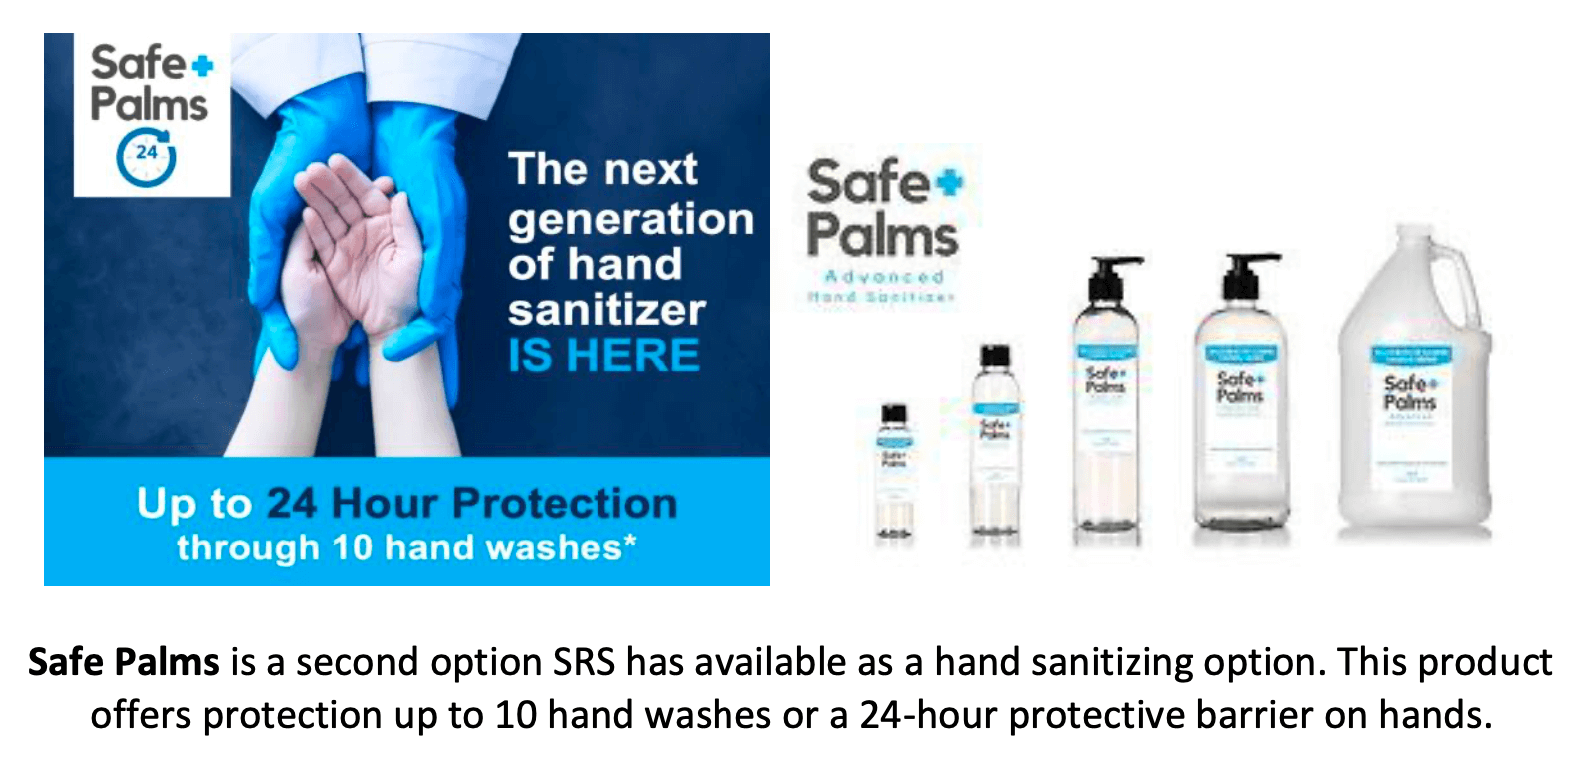 SafePalms - Next Generation Hand Sanitizer